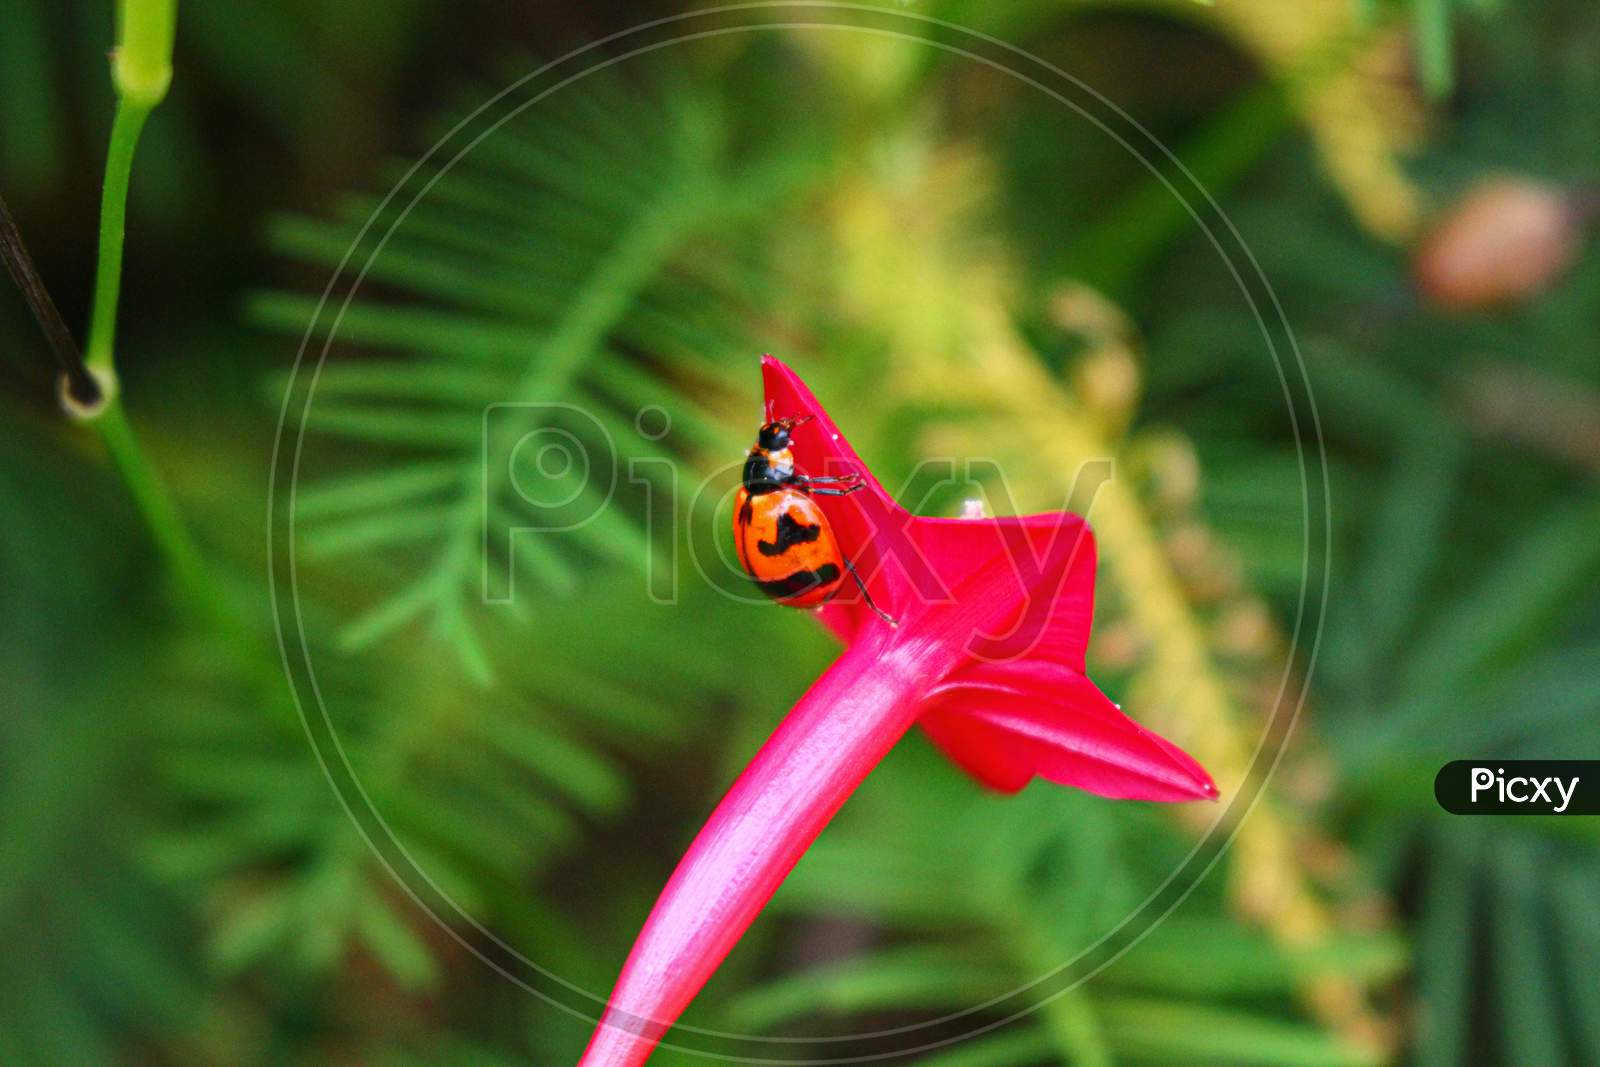 beaulyful Ladybug rests on a flower, blur background image